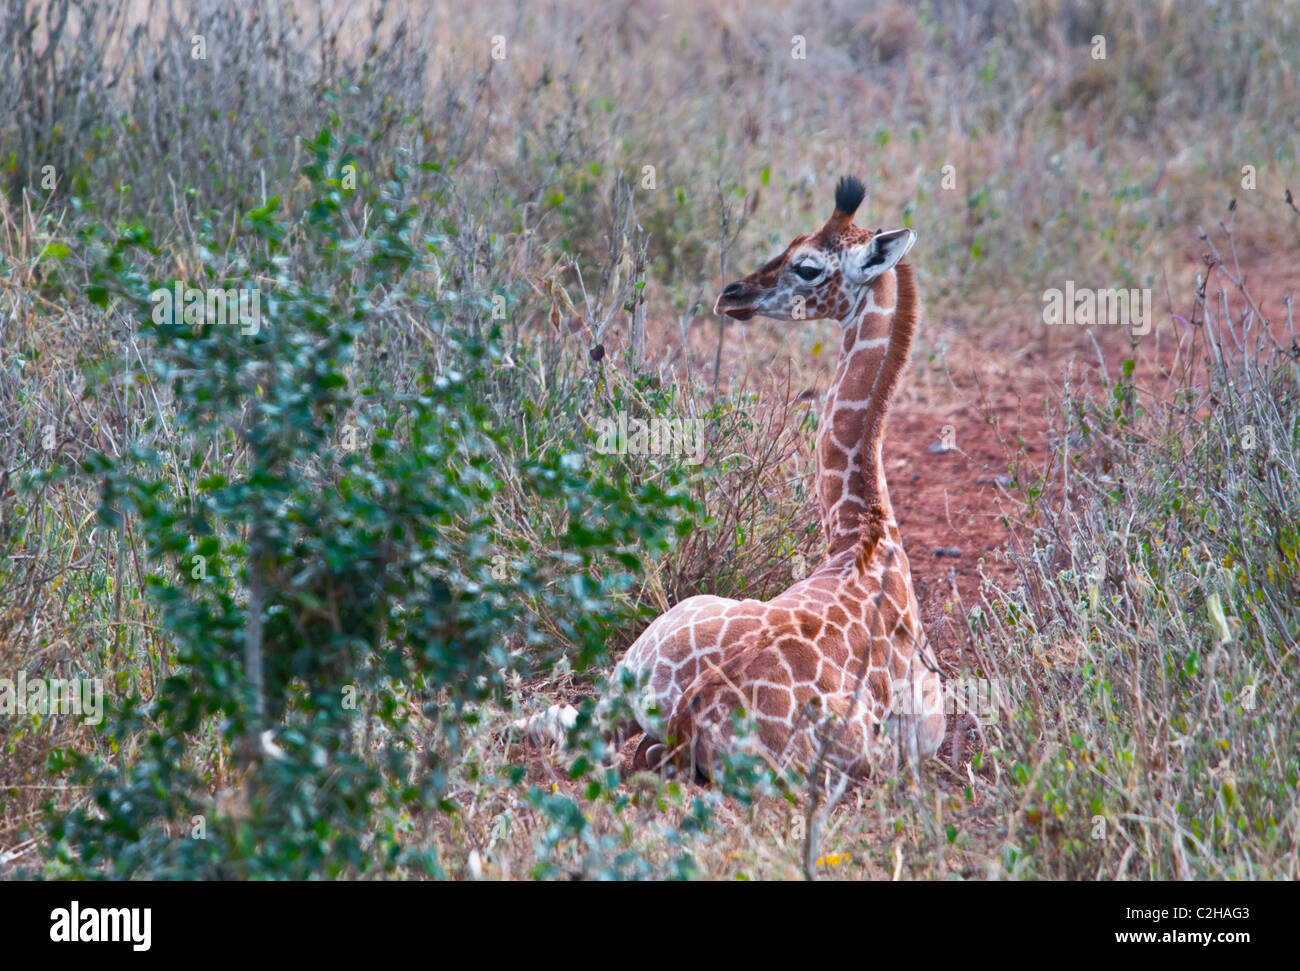 Young Rothschild Giraffe Calf, Giraffa camelopardalis rothschild, Giraffe Manor, Nairobi, Kenya, Africa Stock Photo